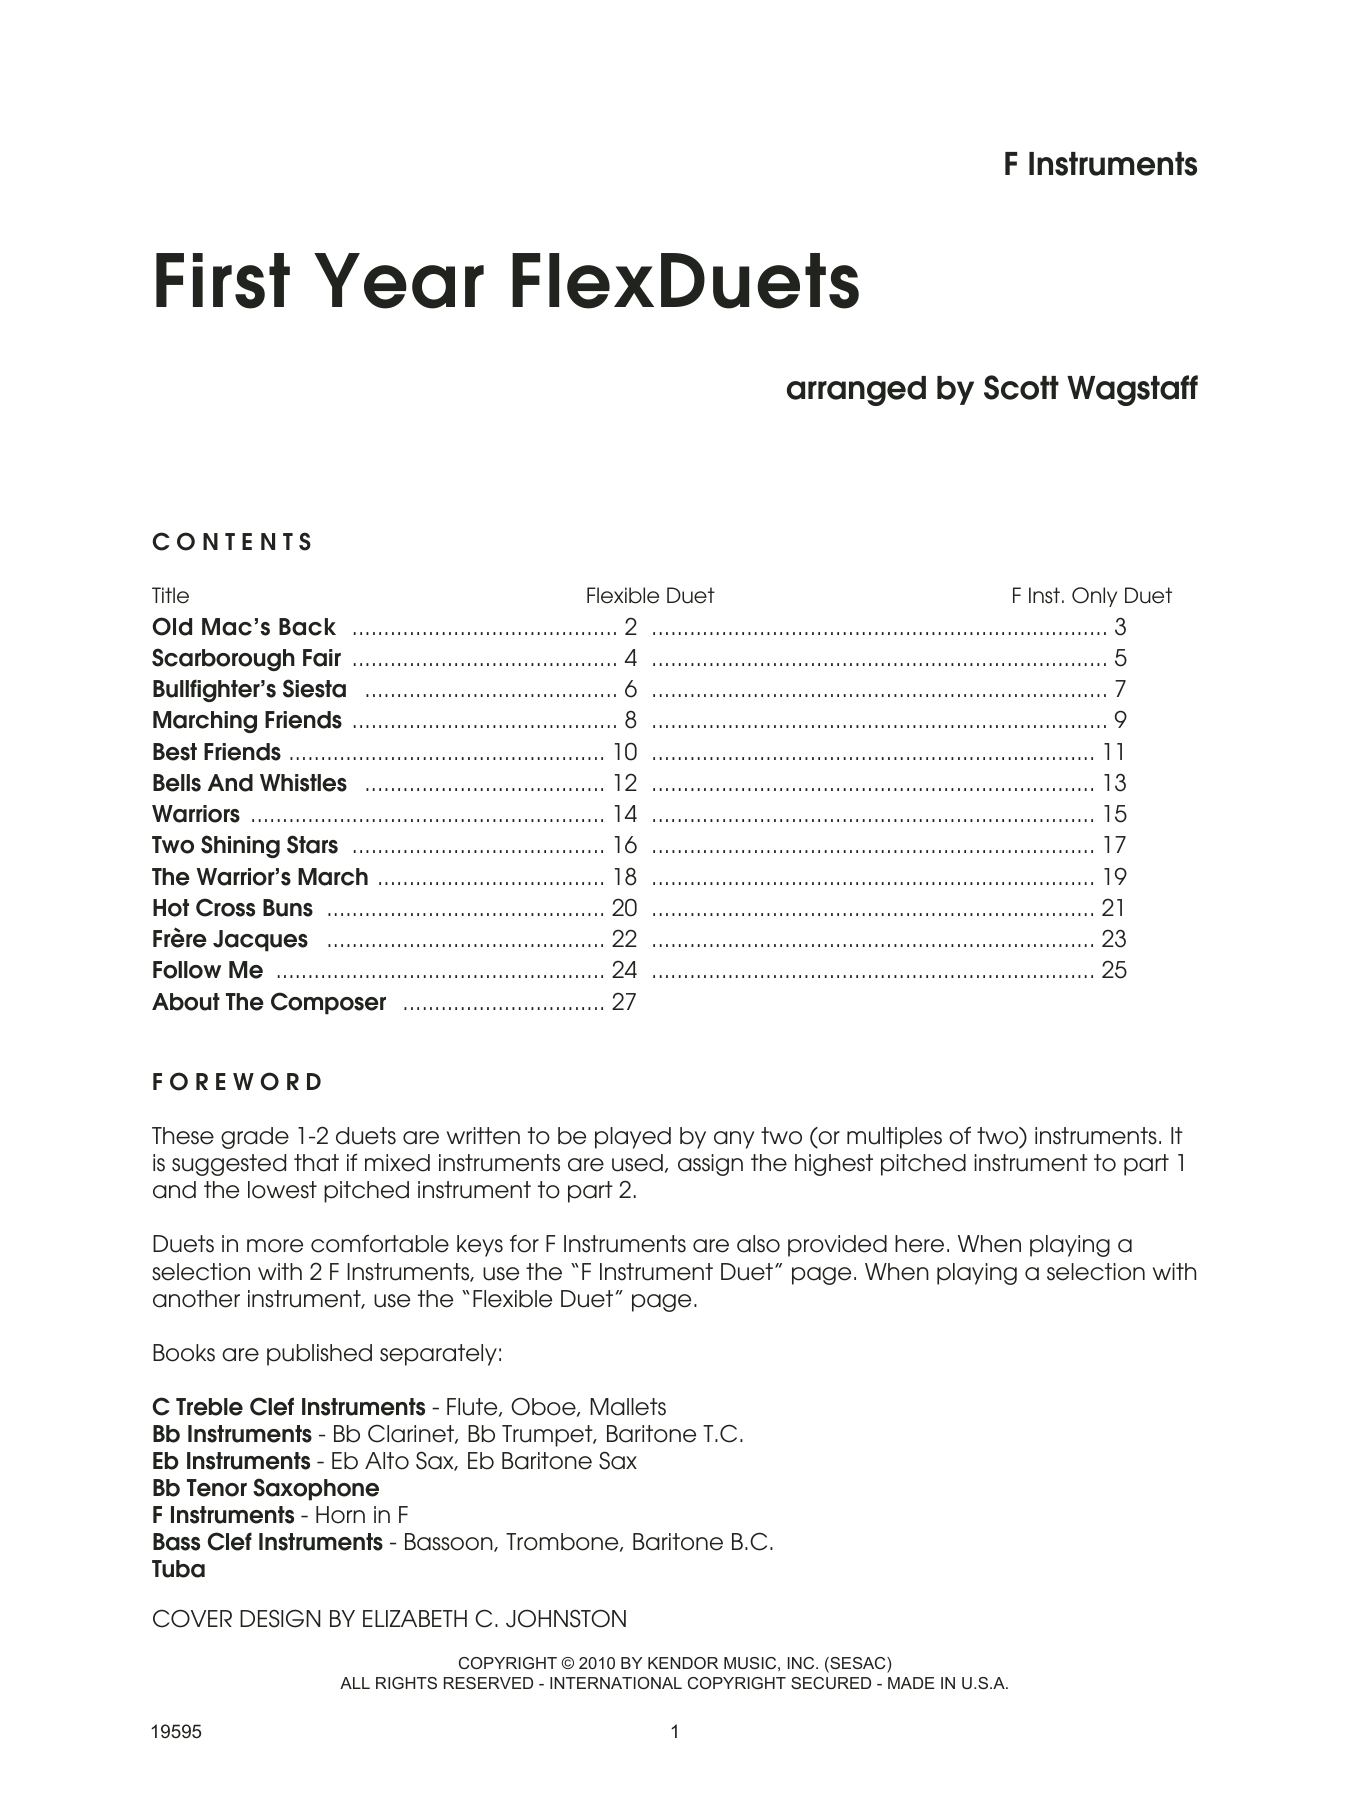 Download Scott Wagstaff First Year FlexDuets - F Instruments Sheet Music